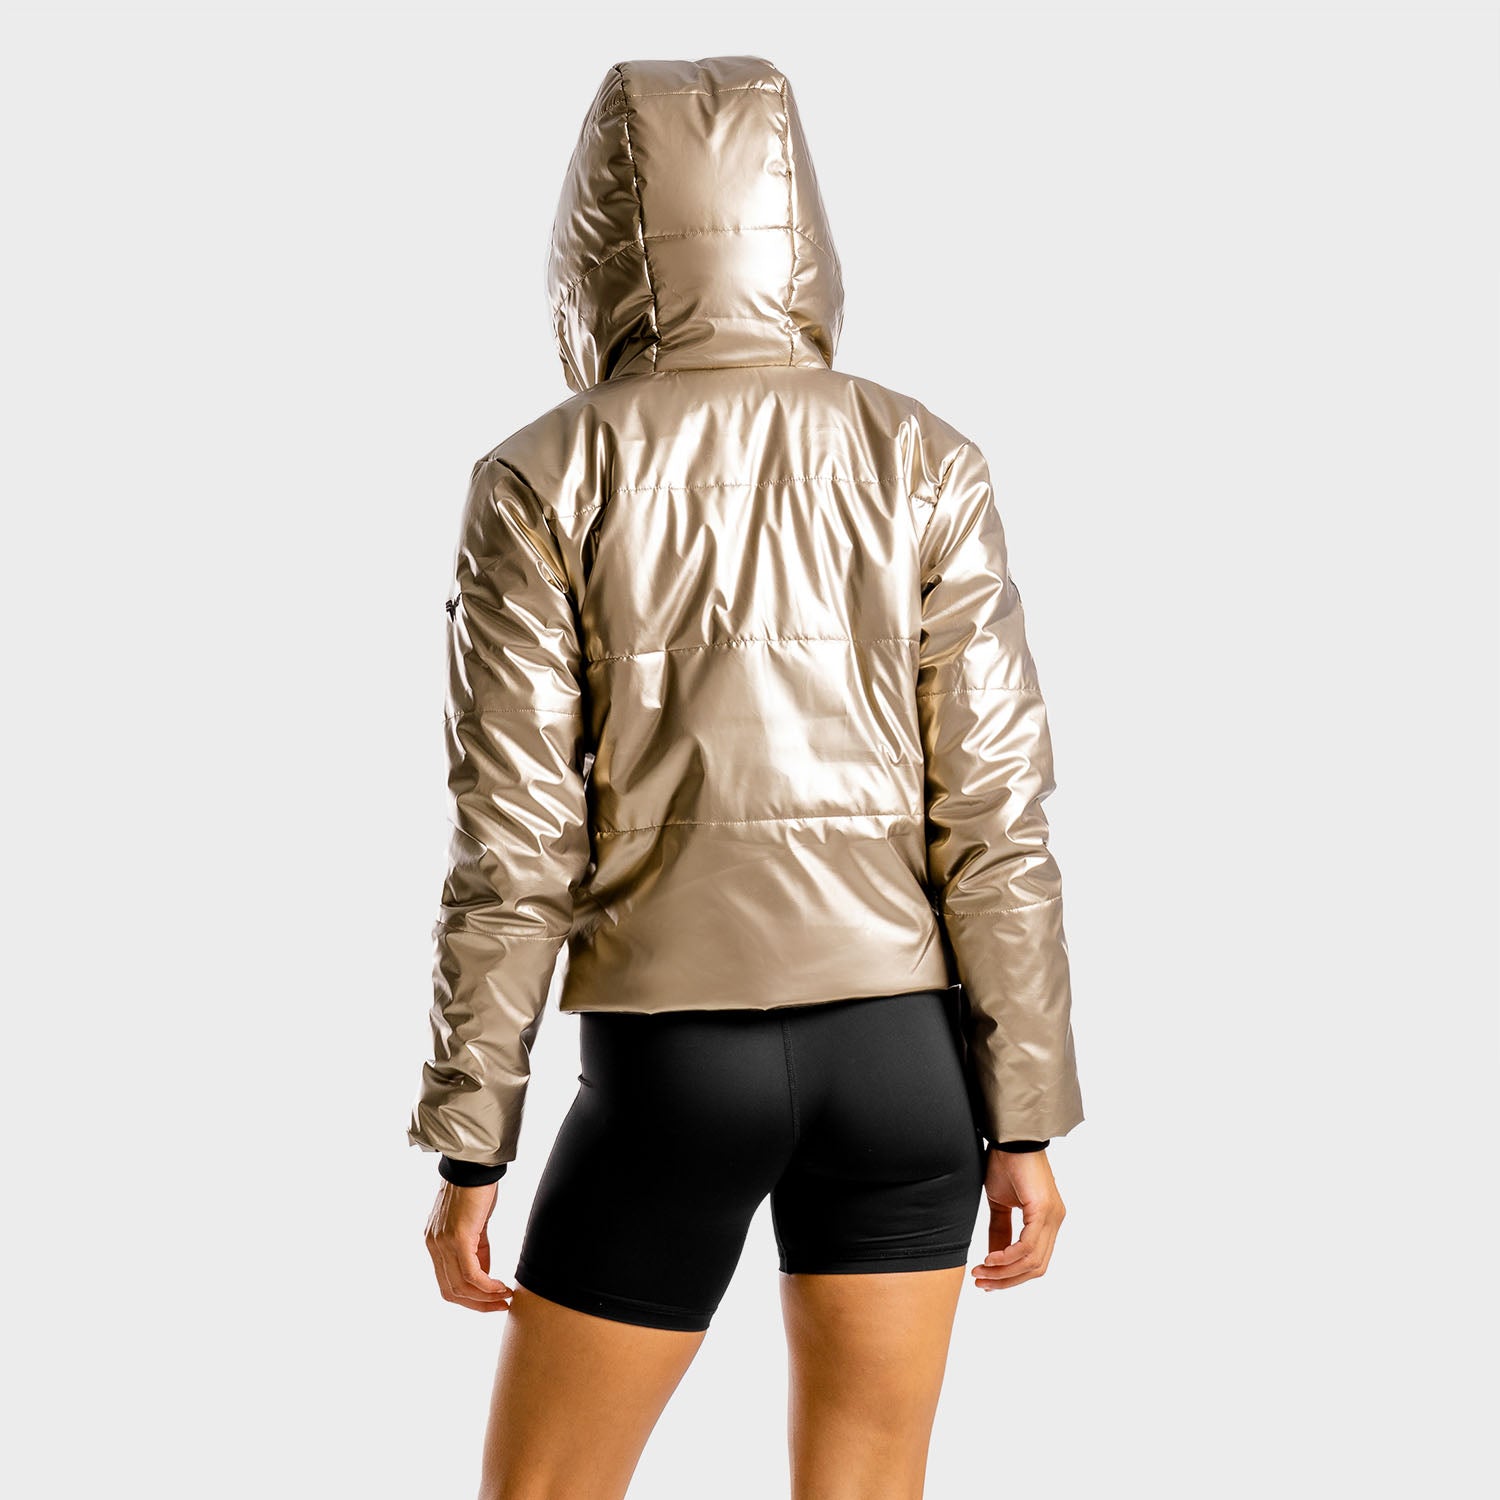 squatwolf-gym-hoodies-women-wonder-woman-gold-puffer-workout-clothes